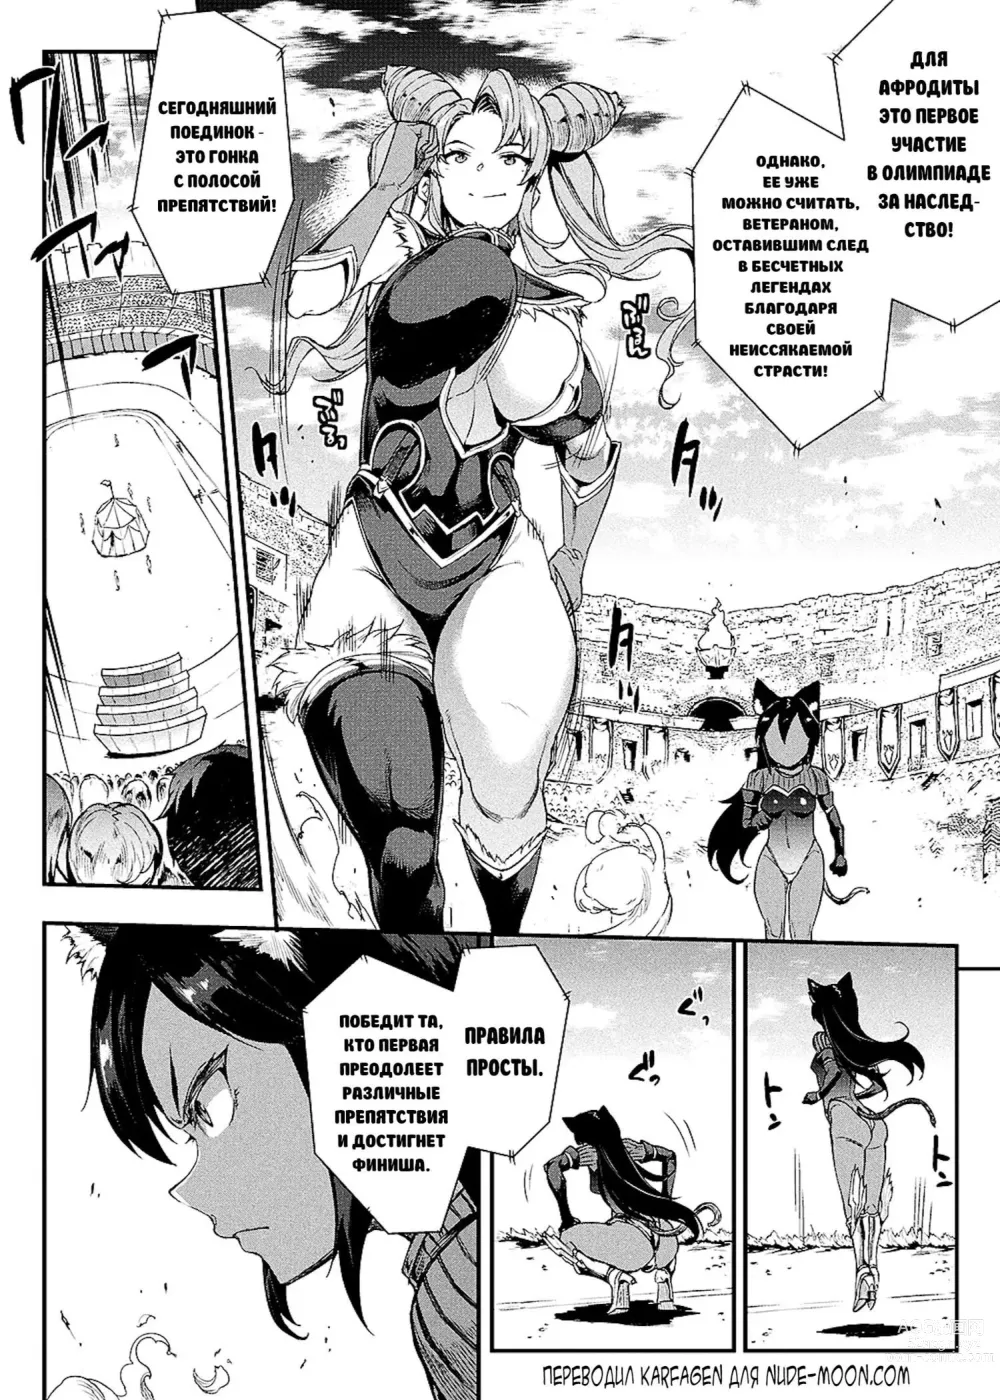 Page 20 of manga Raikou Shinki Igis Magia II -PANDRA saga 3rd ignition-